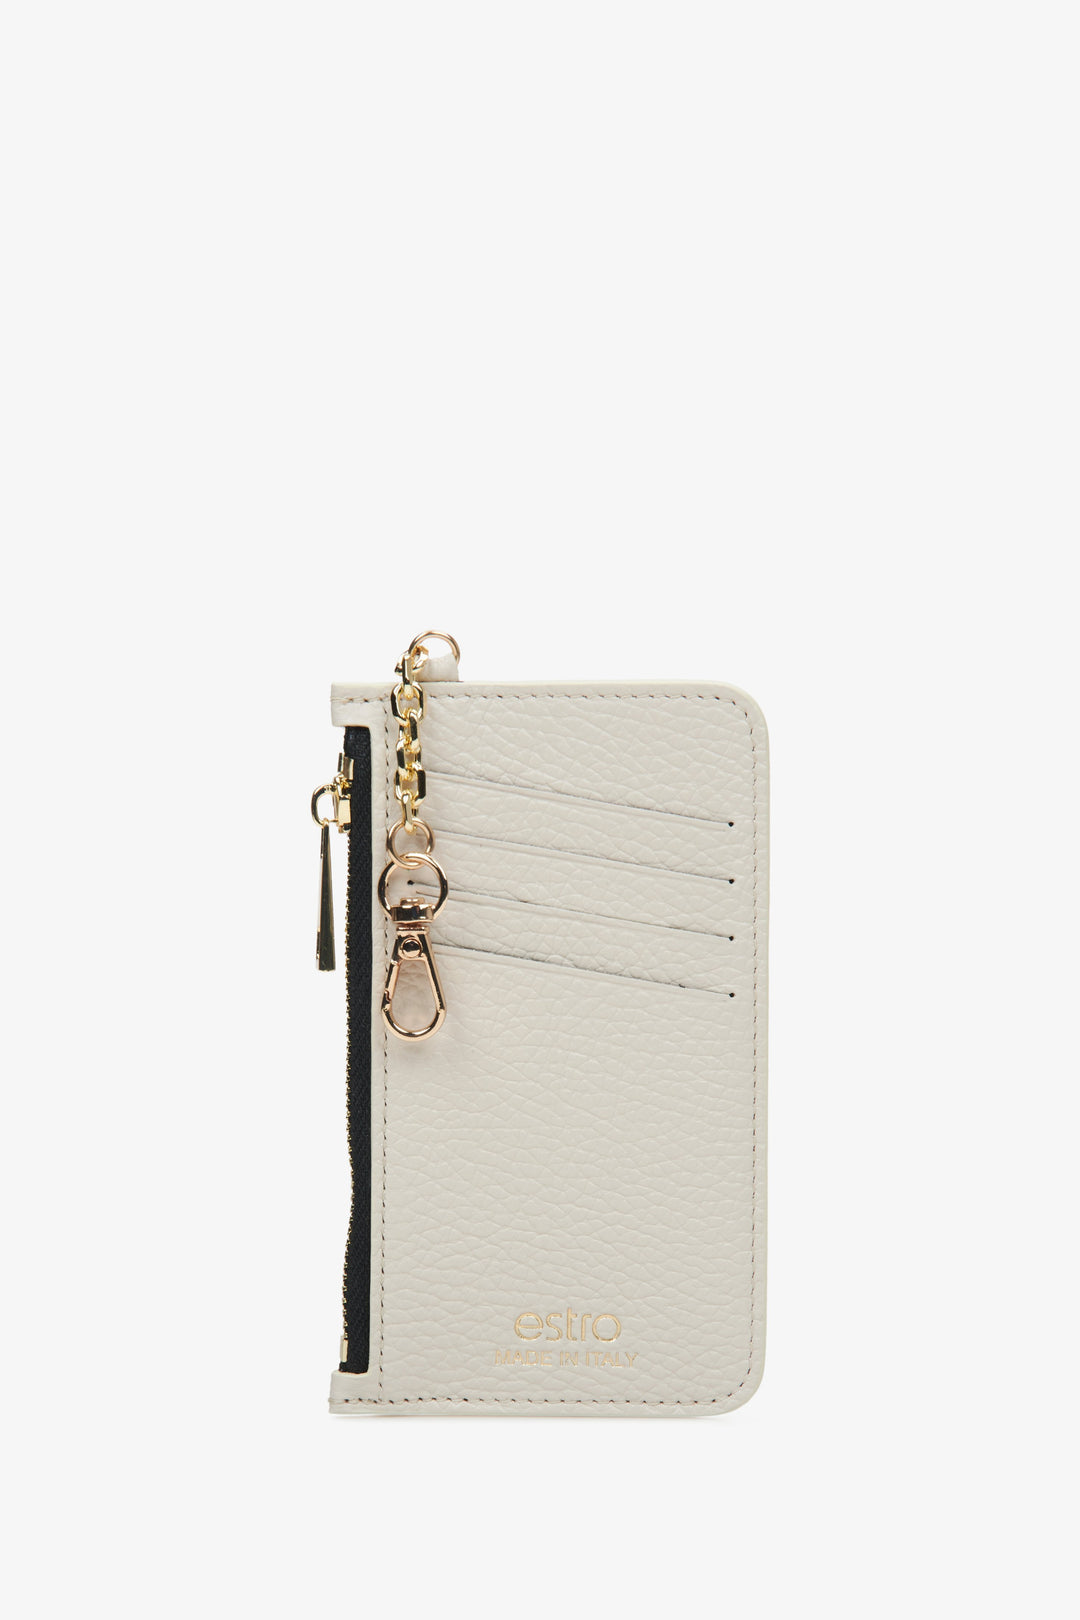 Women's Compact Milky-Beige Wallet made of Genuine Italian Leather Estro ER00115019.